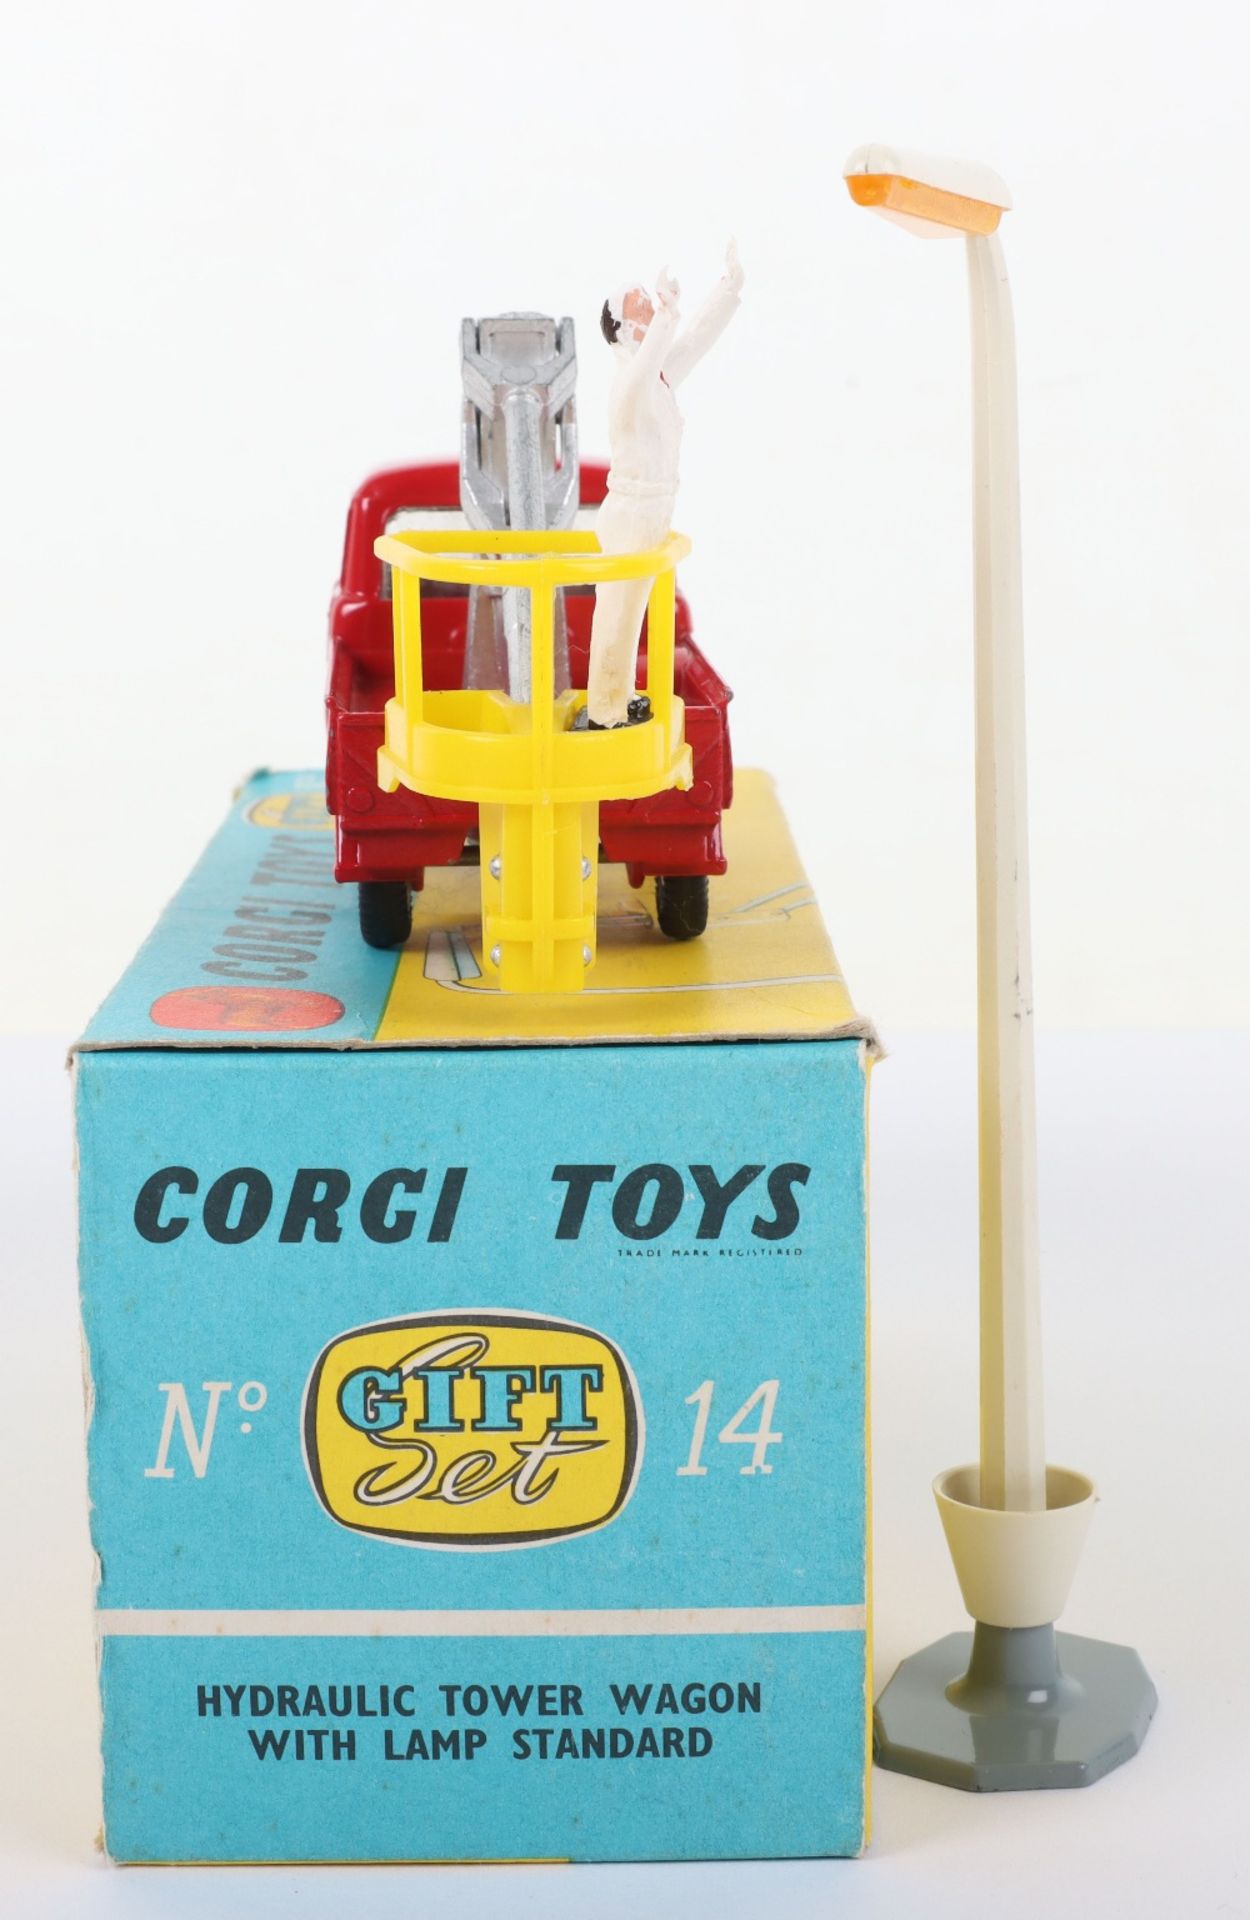 Corgi Toys Gift Set 14 Hydraulic Tower Wagon with Lamp Standard - Bild 4 aus 5